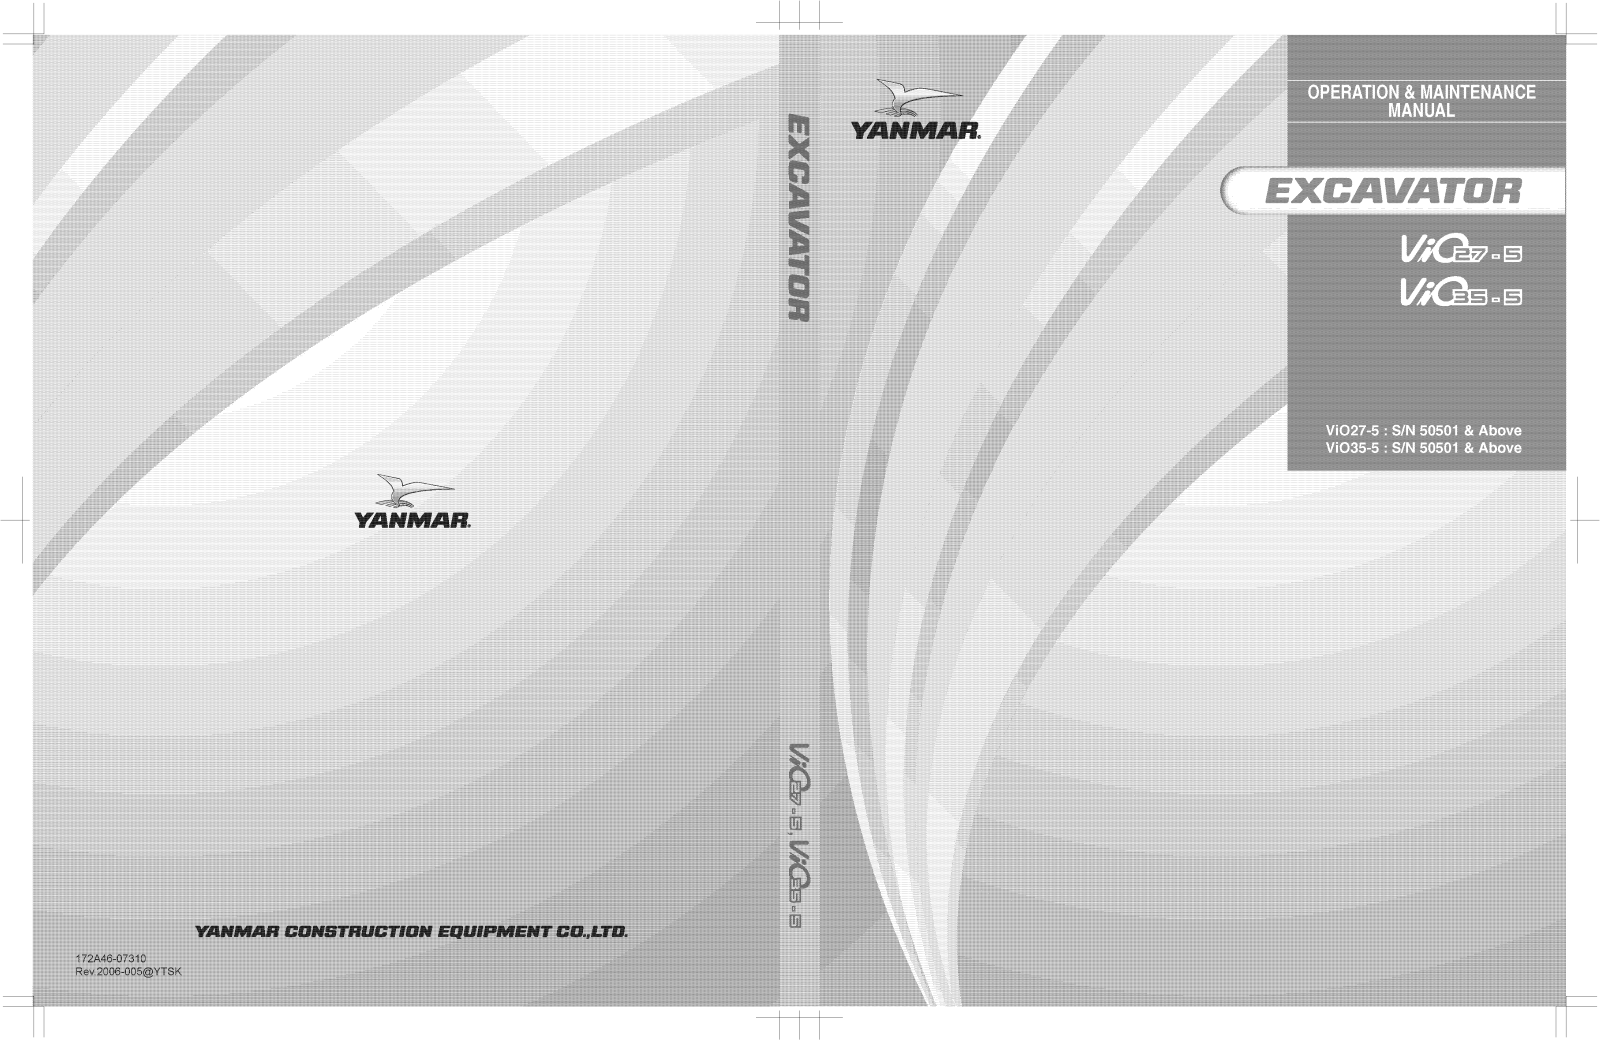 Yanmar ViO 35-5, ViO 27-5 Operation & Maintenance Manual